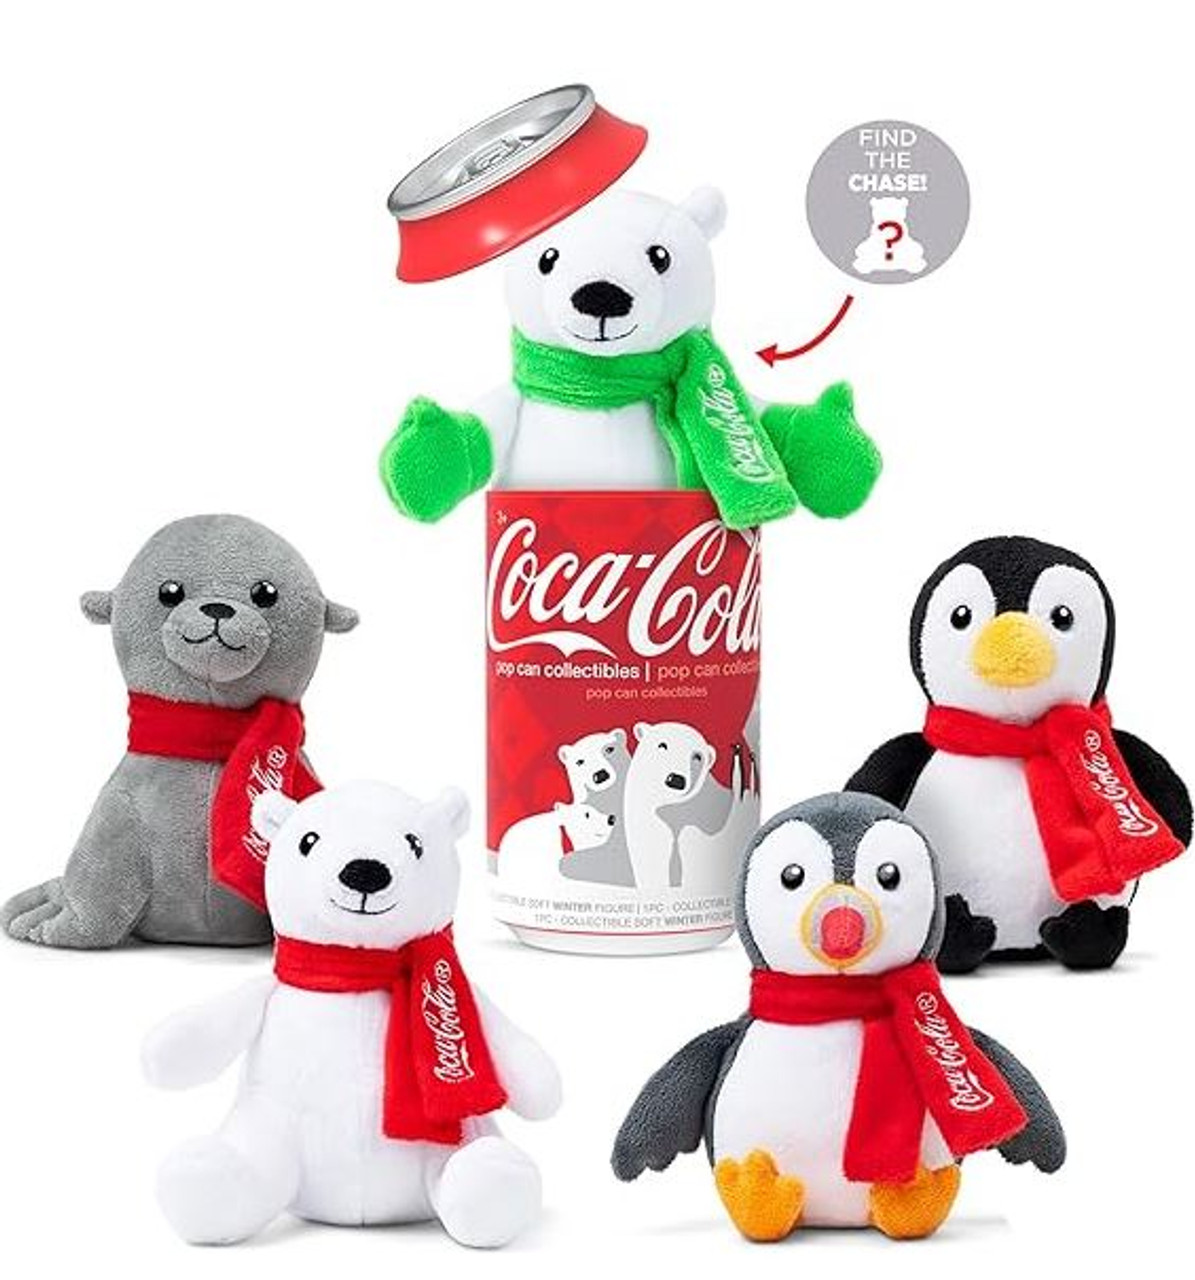 Coca-Cola Pop Cans Collectibles 5 Plush 